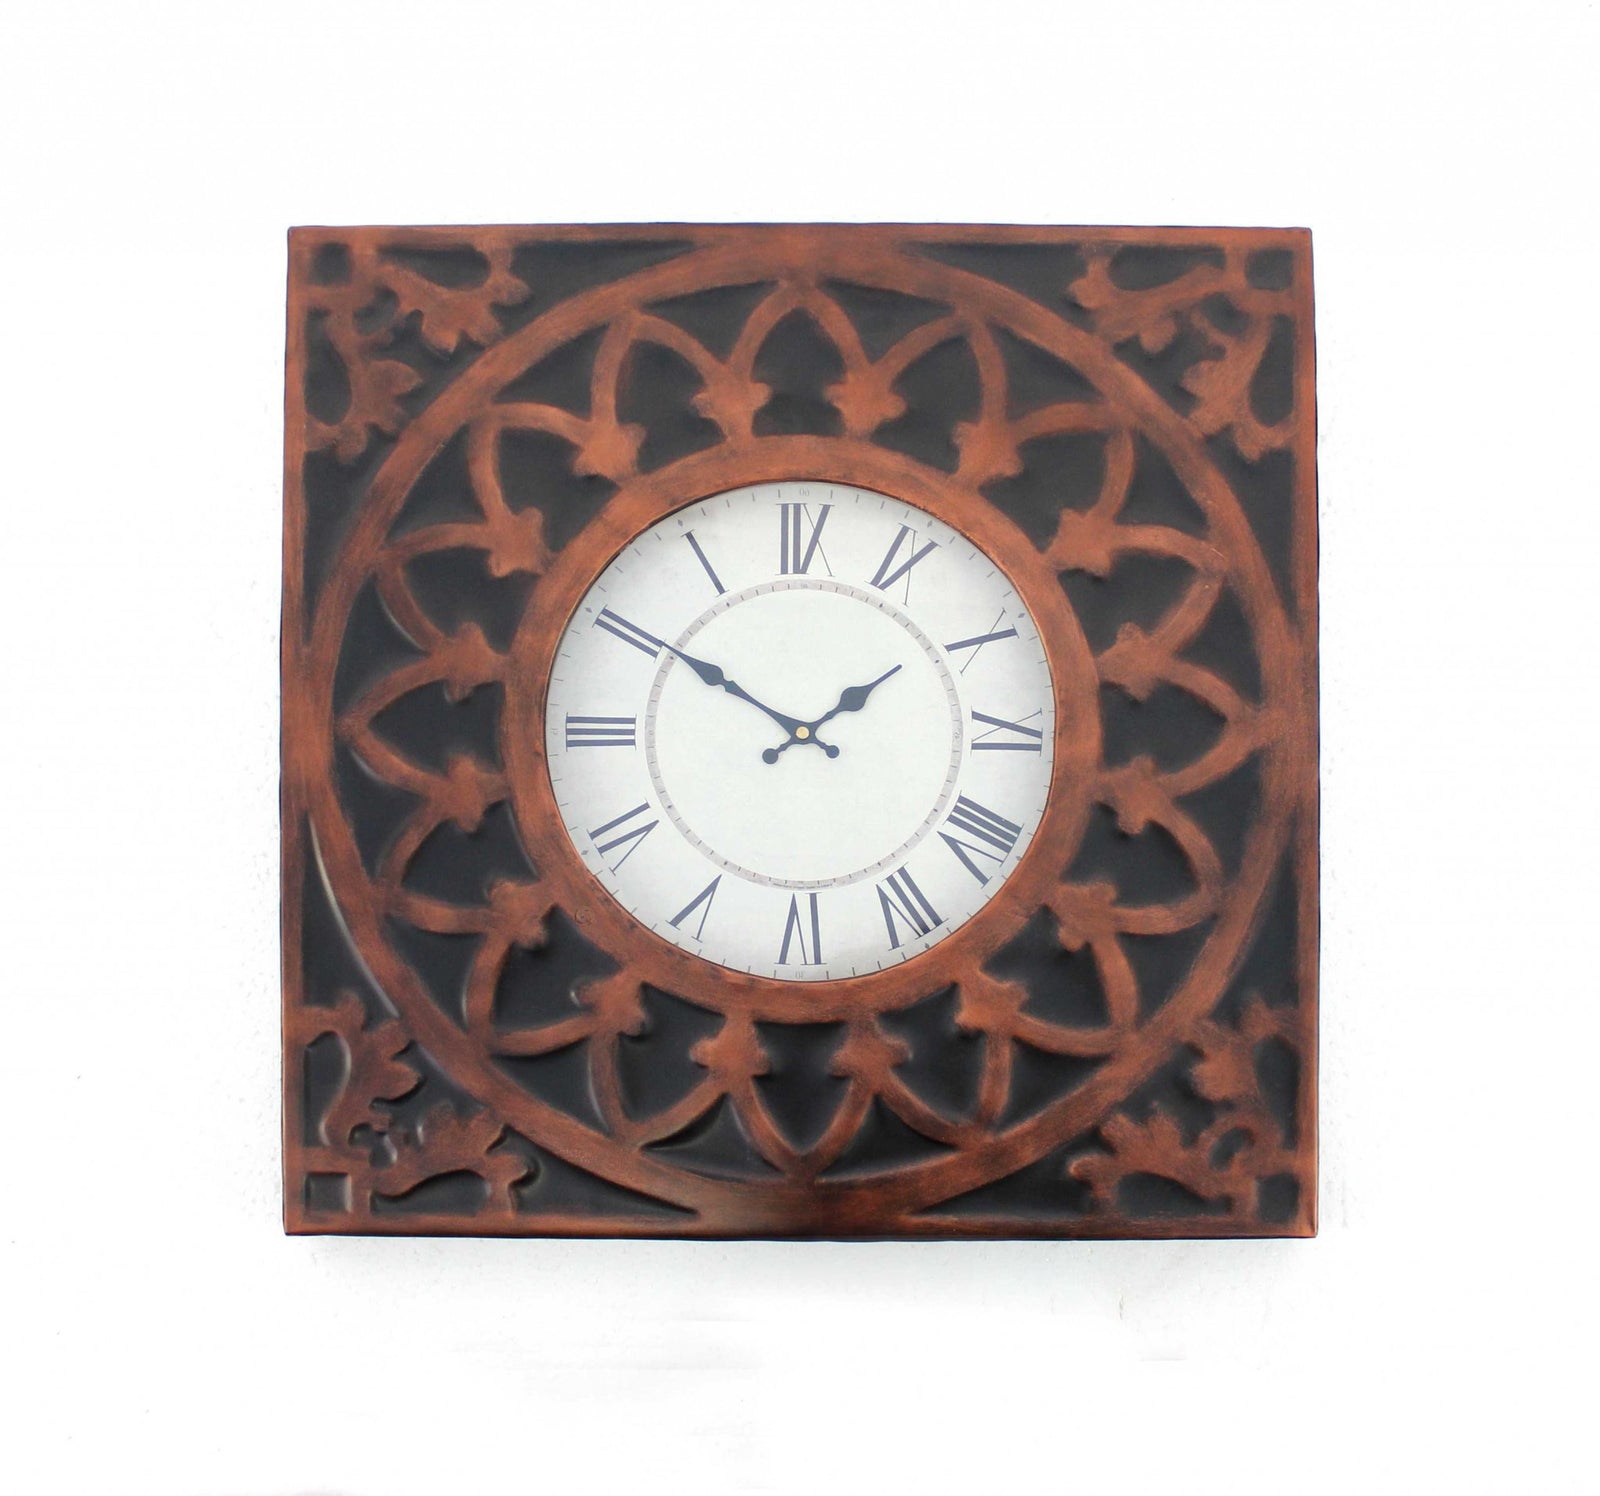 23" Square Bronze Glass Analog Wall Clock